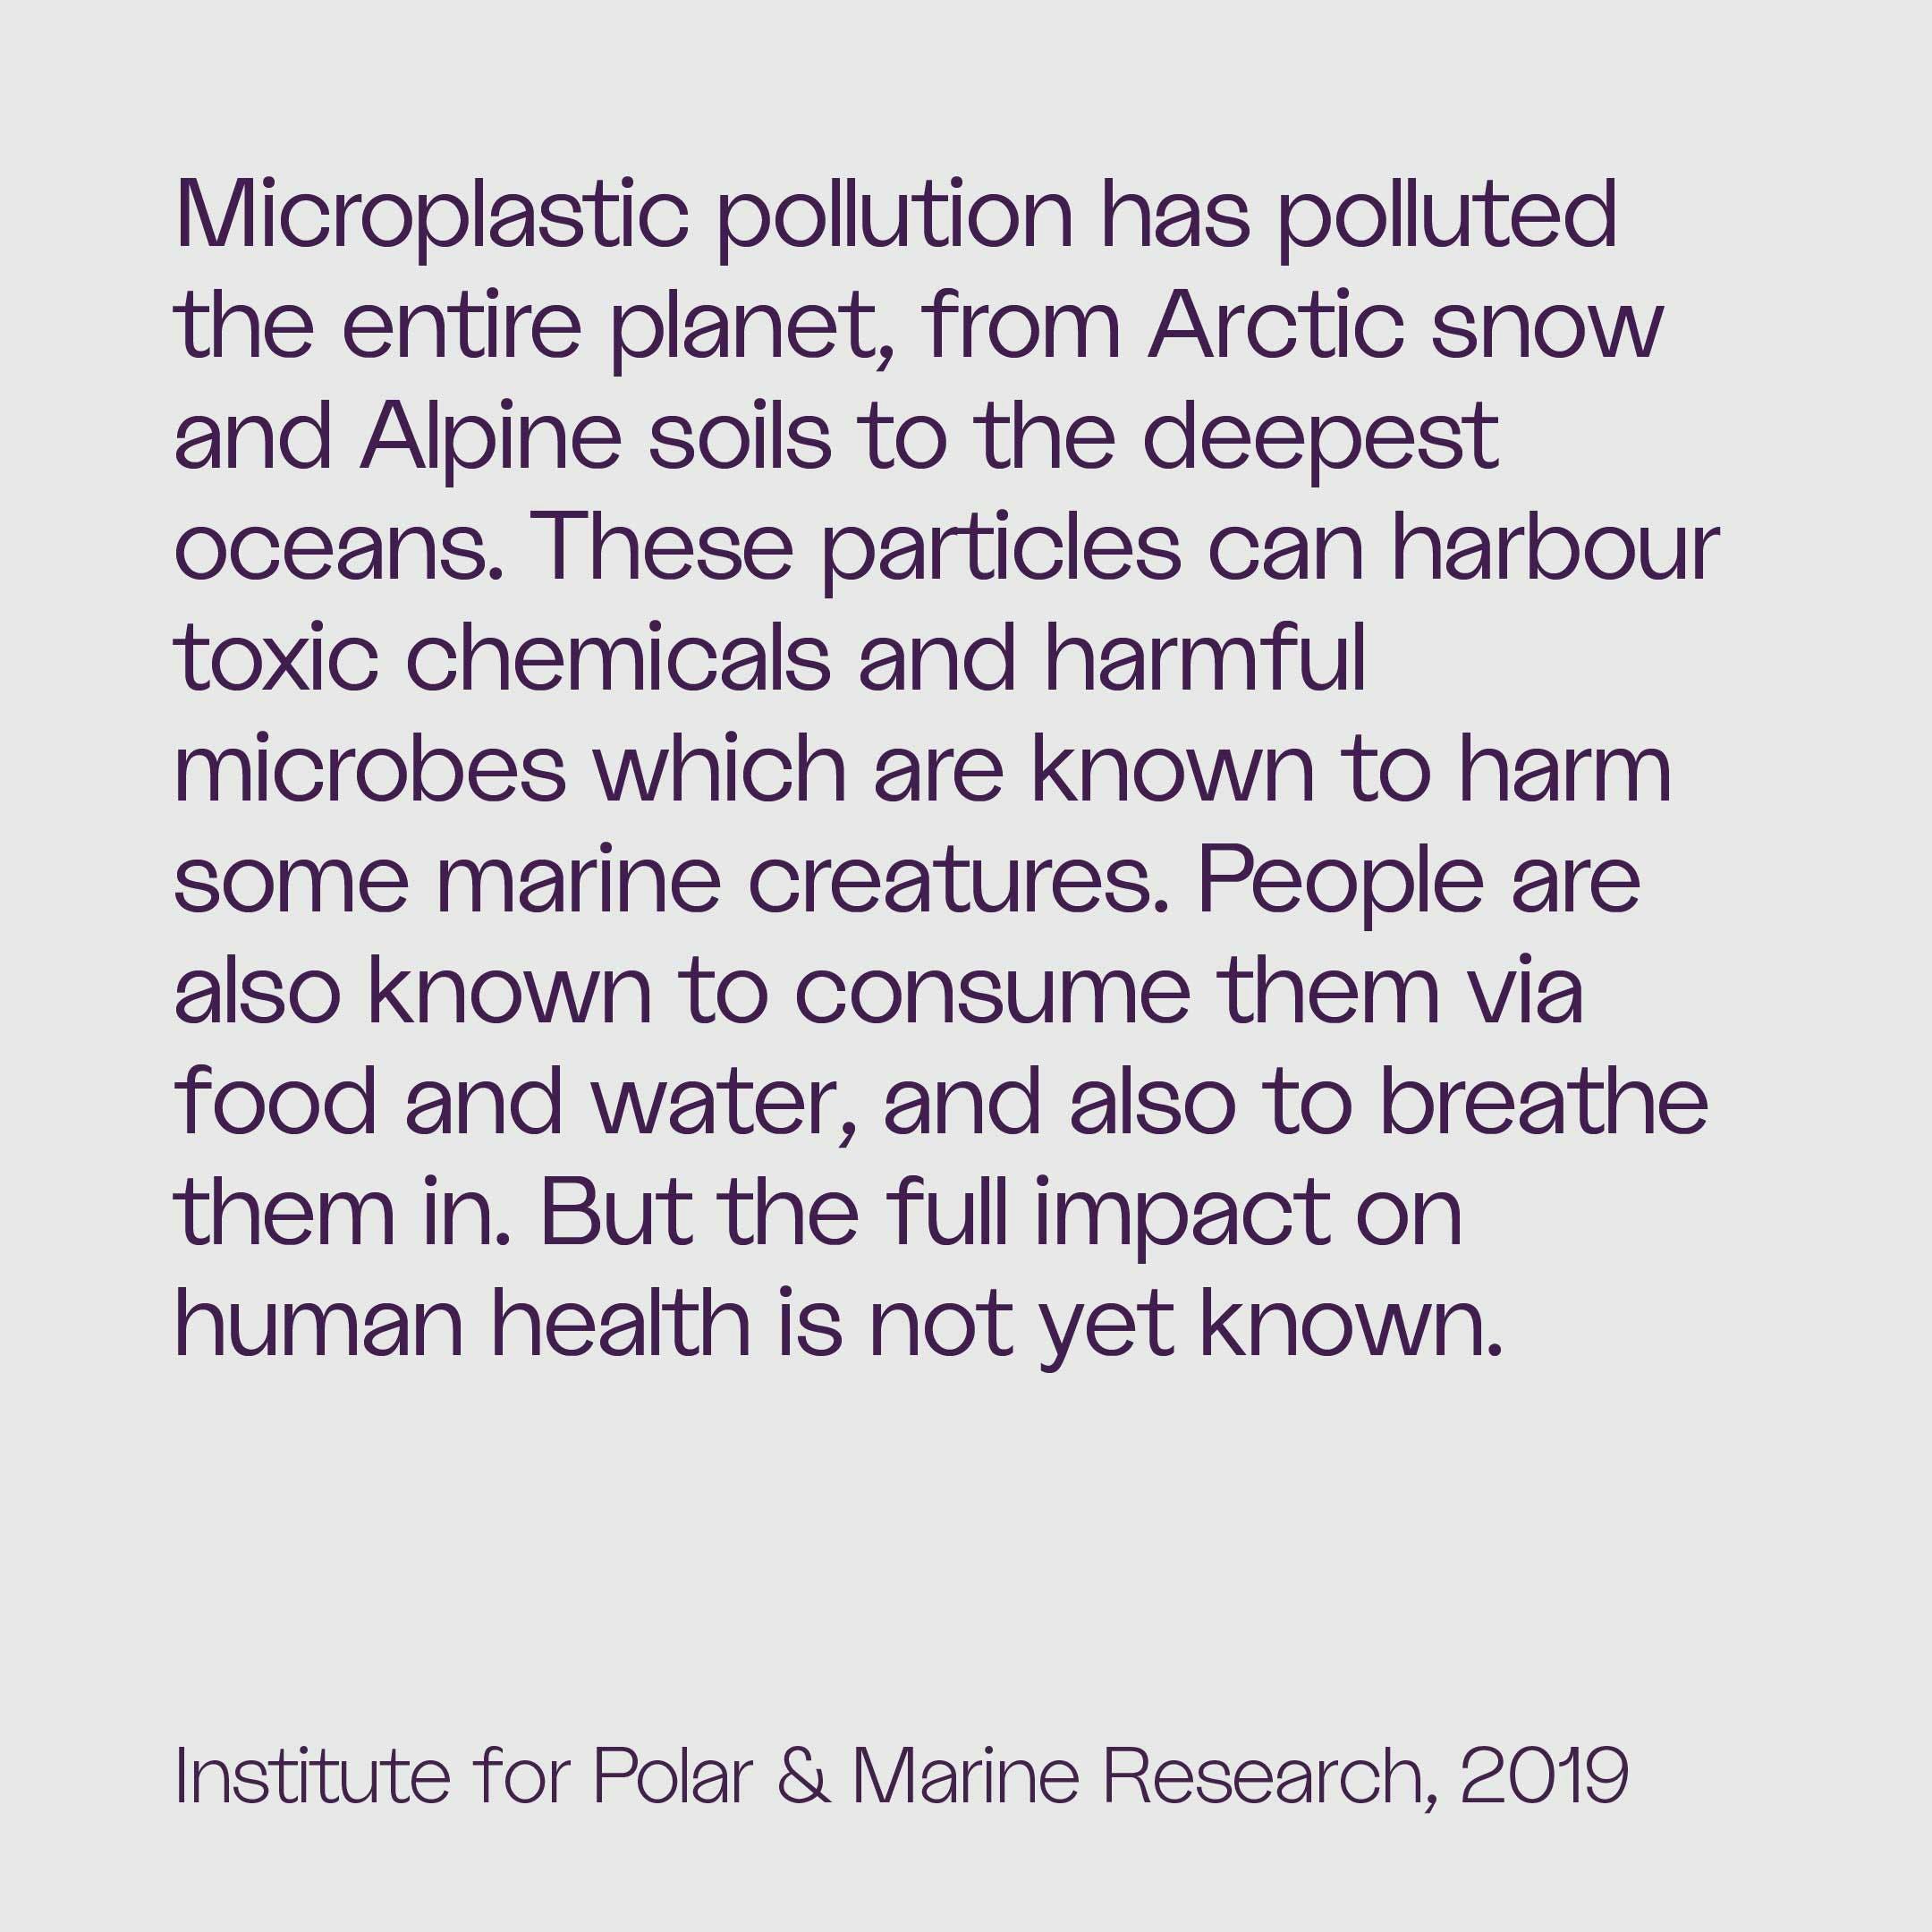 Institute for Polar & Marine Research